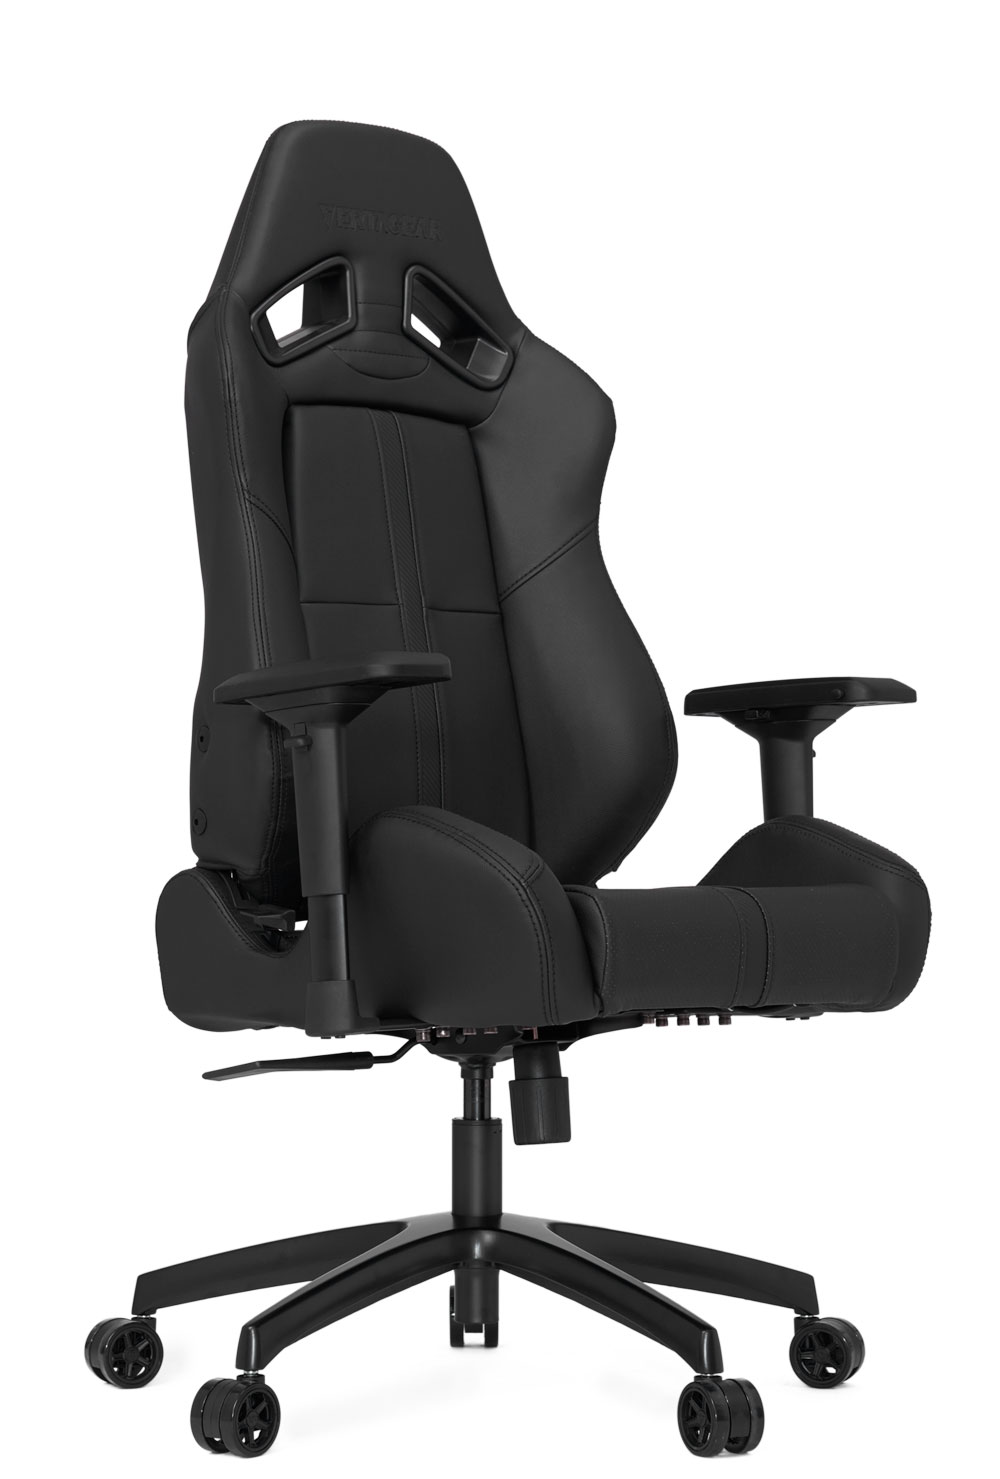 Vertagear SL5000 Gaming Chair Black / Carbon